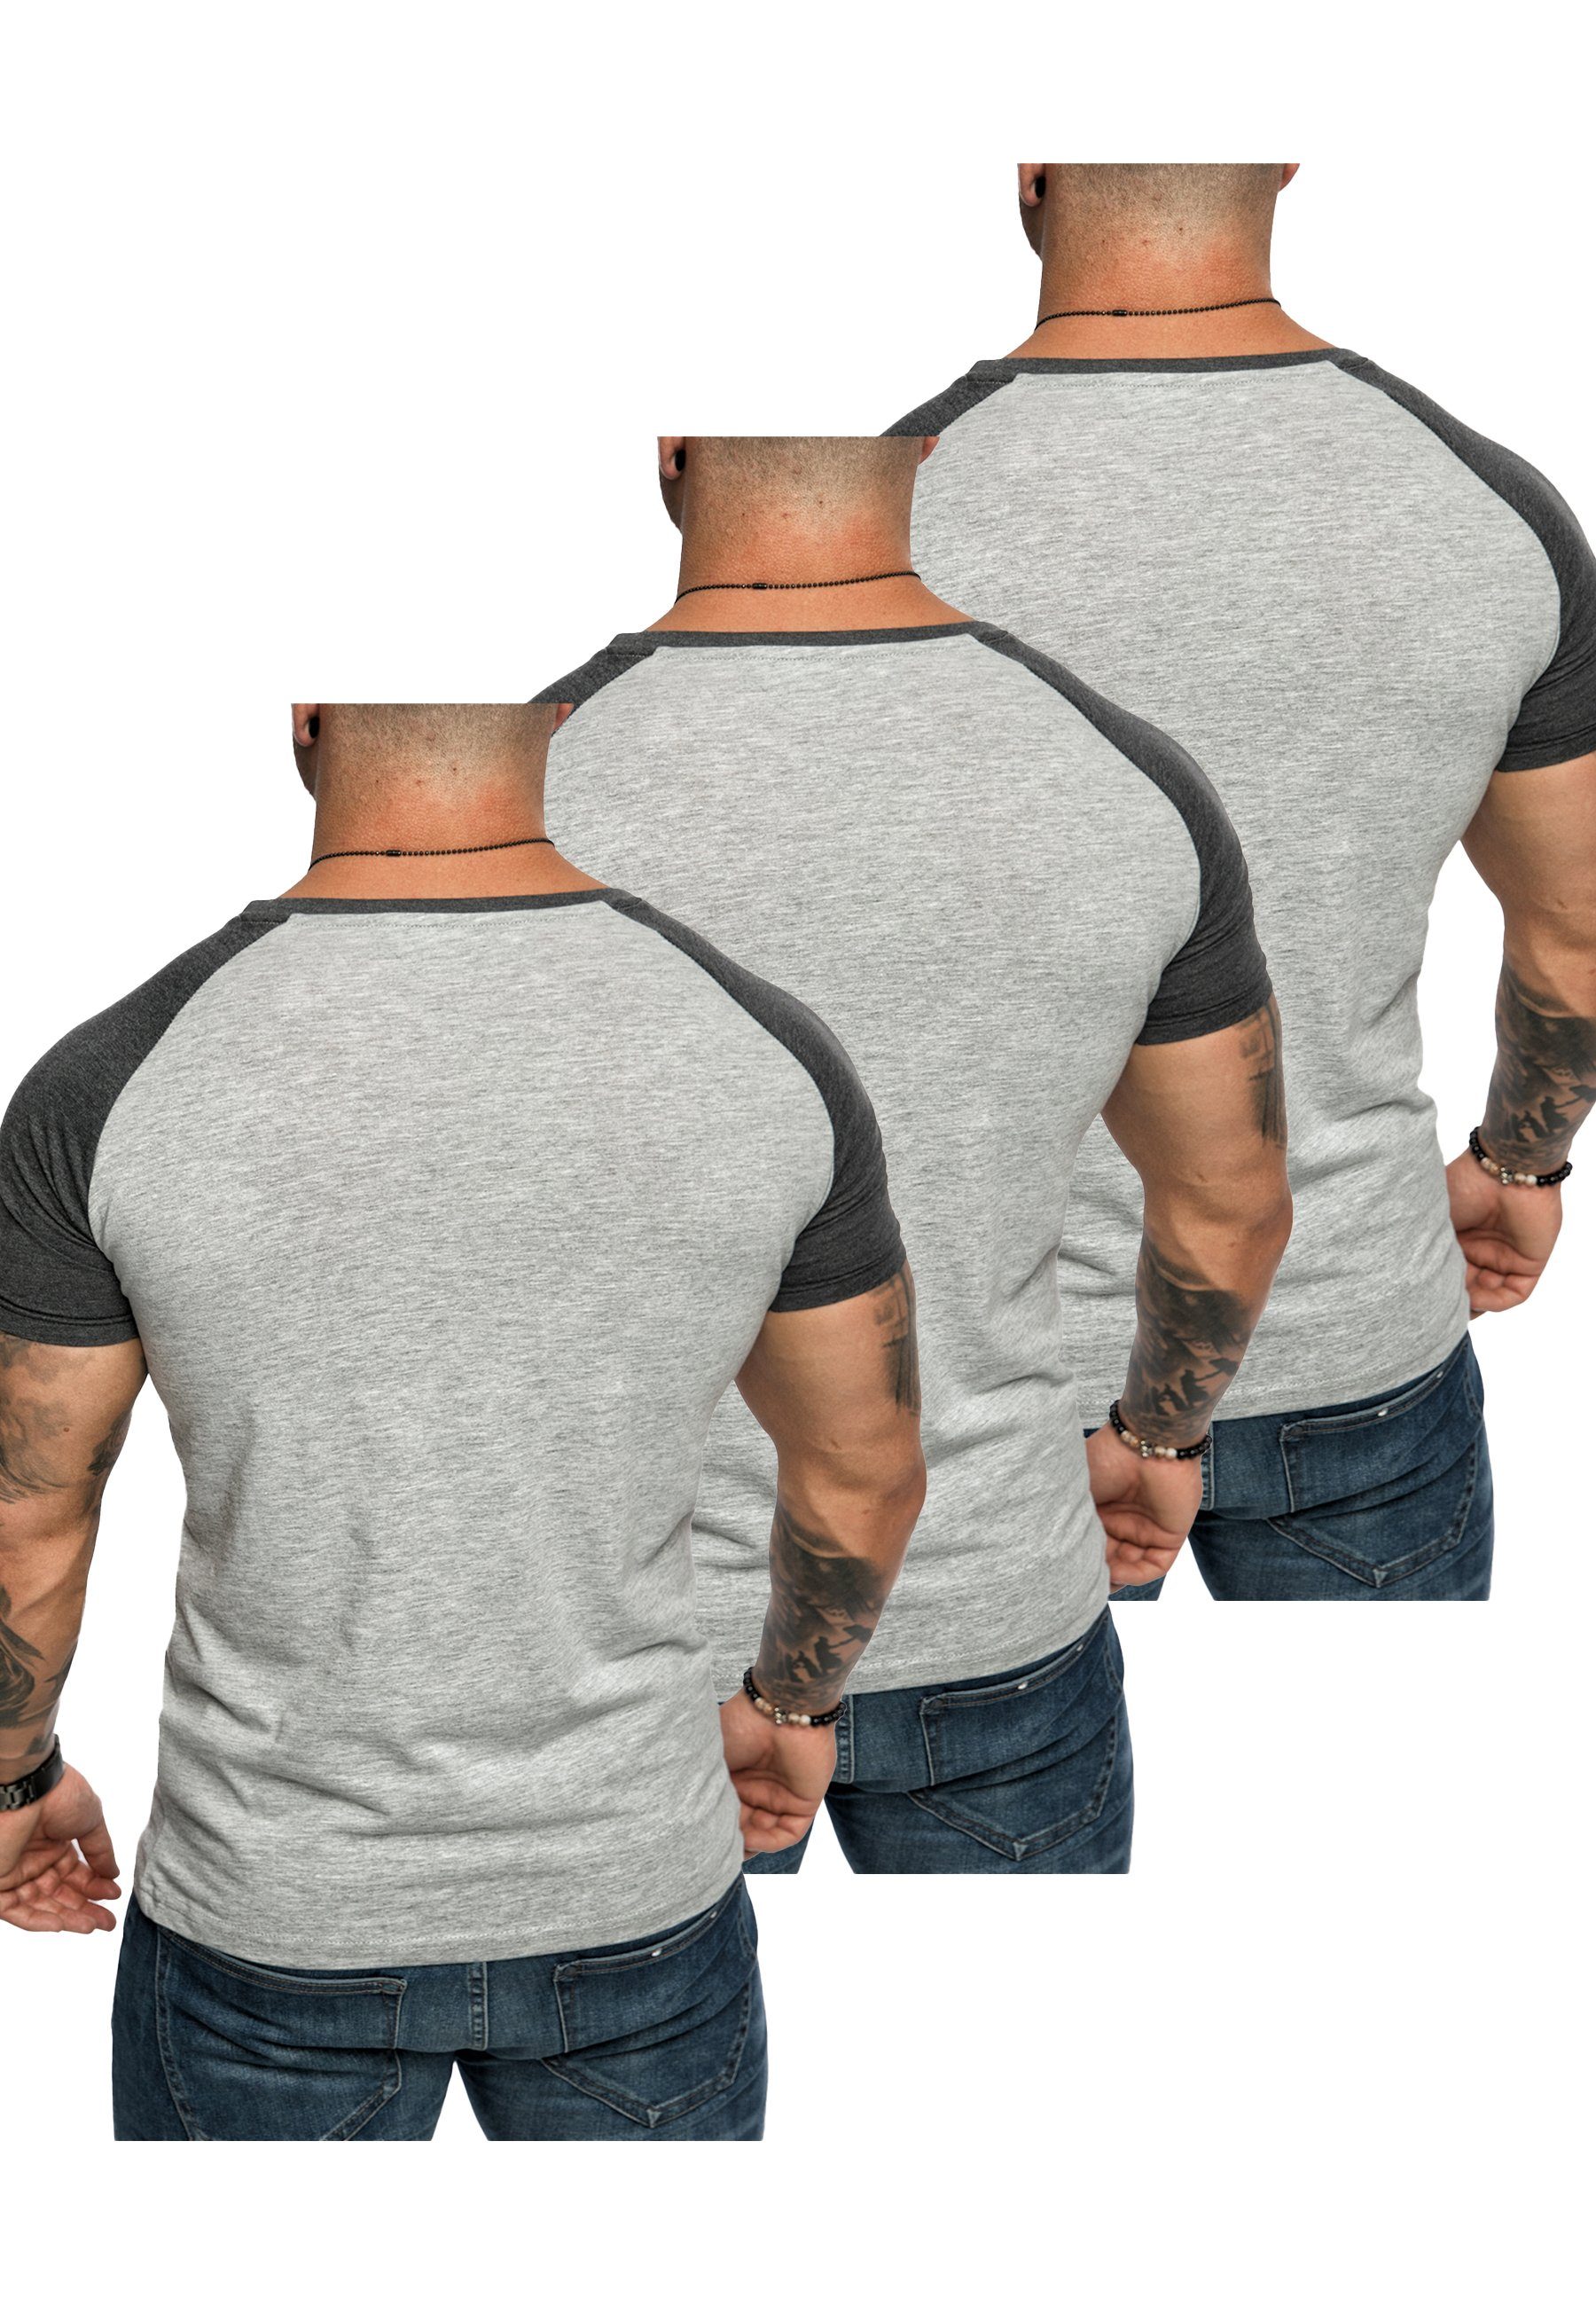 T-Shirt Raglan Grau/Anthrazit) Kontrast T-Shirts 3er-Pack 3. Oversize SALEM T-Shirt Amaci&Sons Basic Herren (3x (3er-Pack)